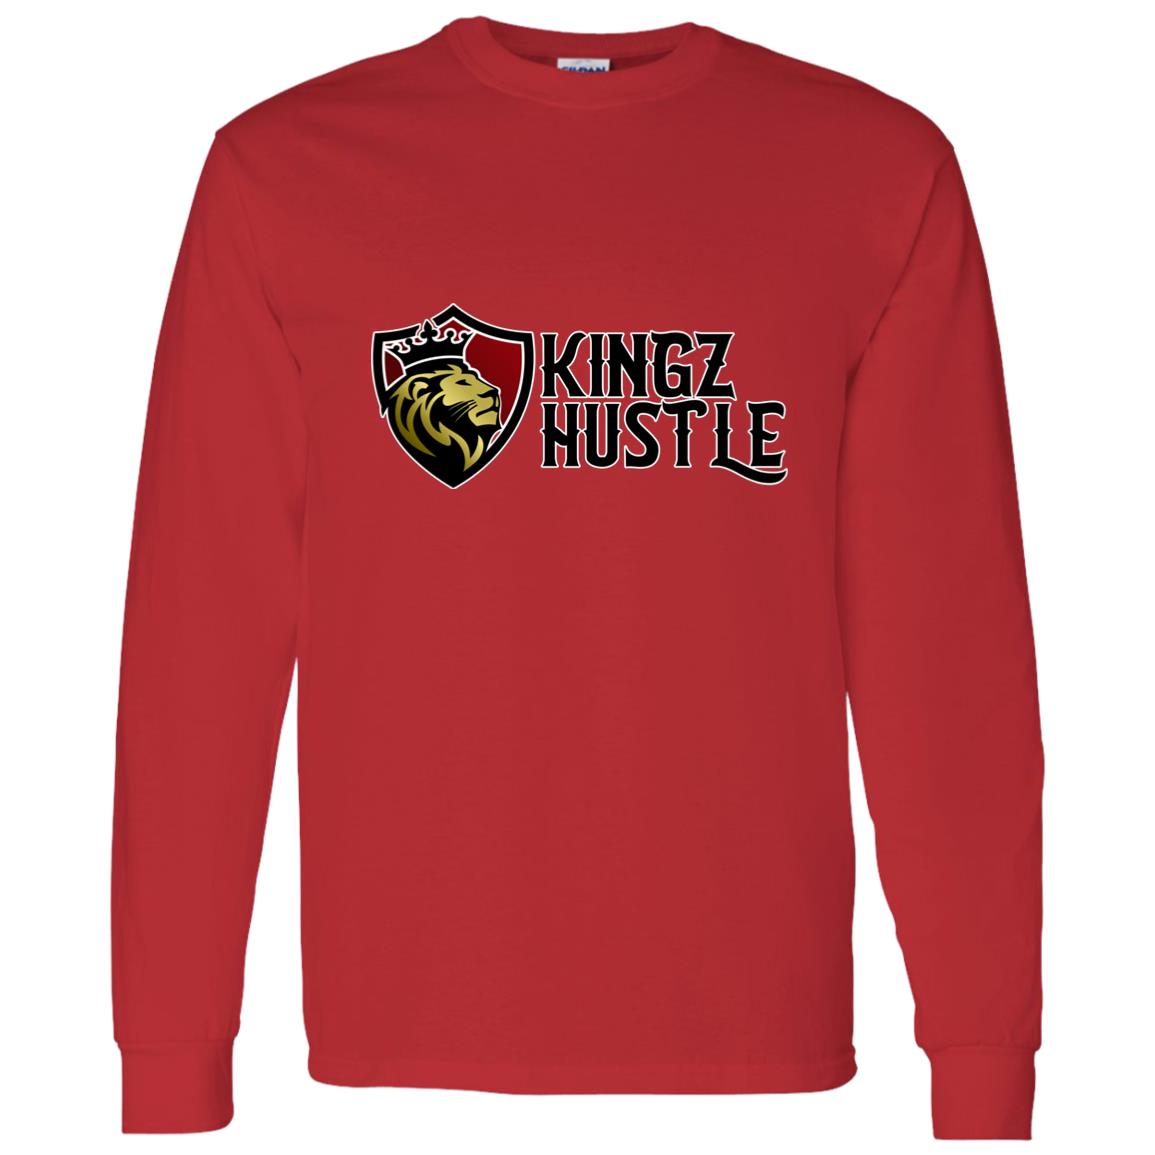 Kingz Hustle LS T-Shirt 5.3 oz.